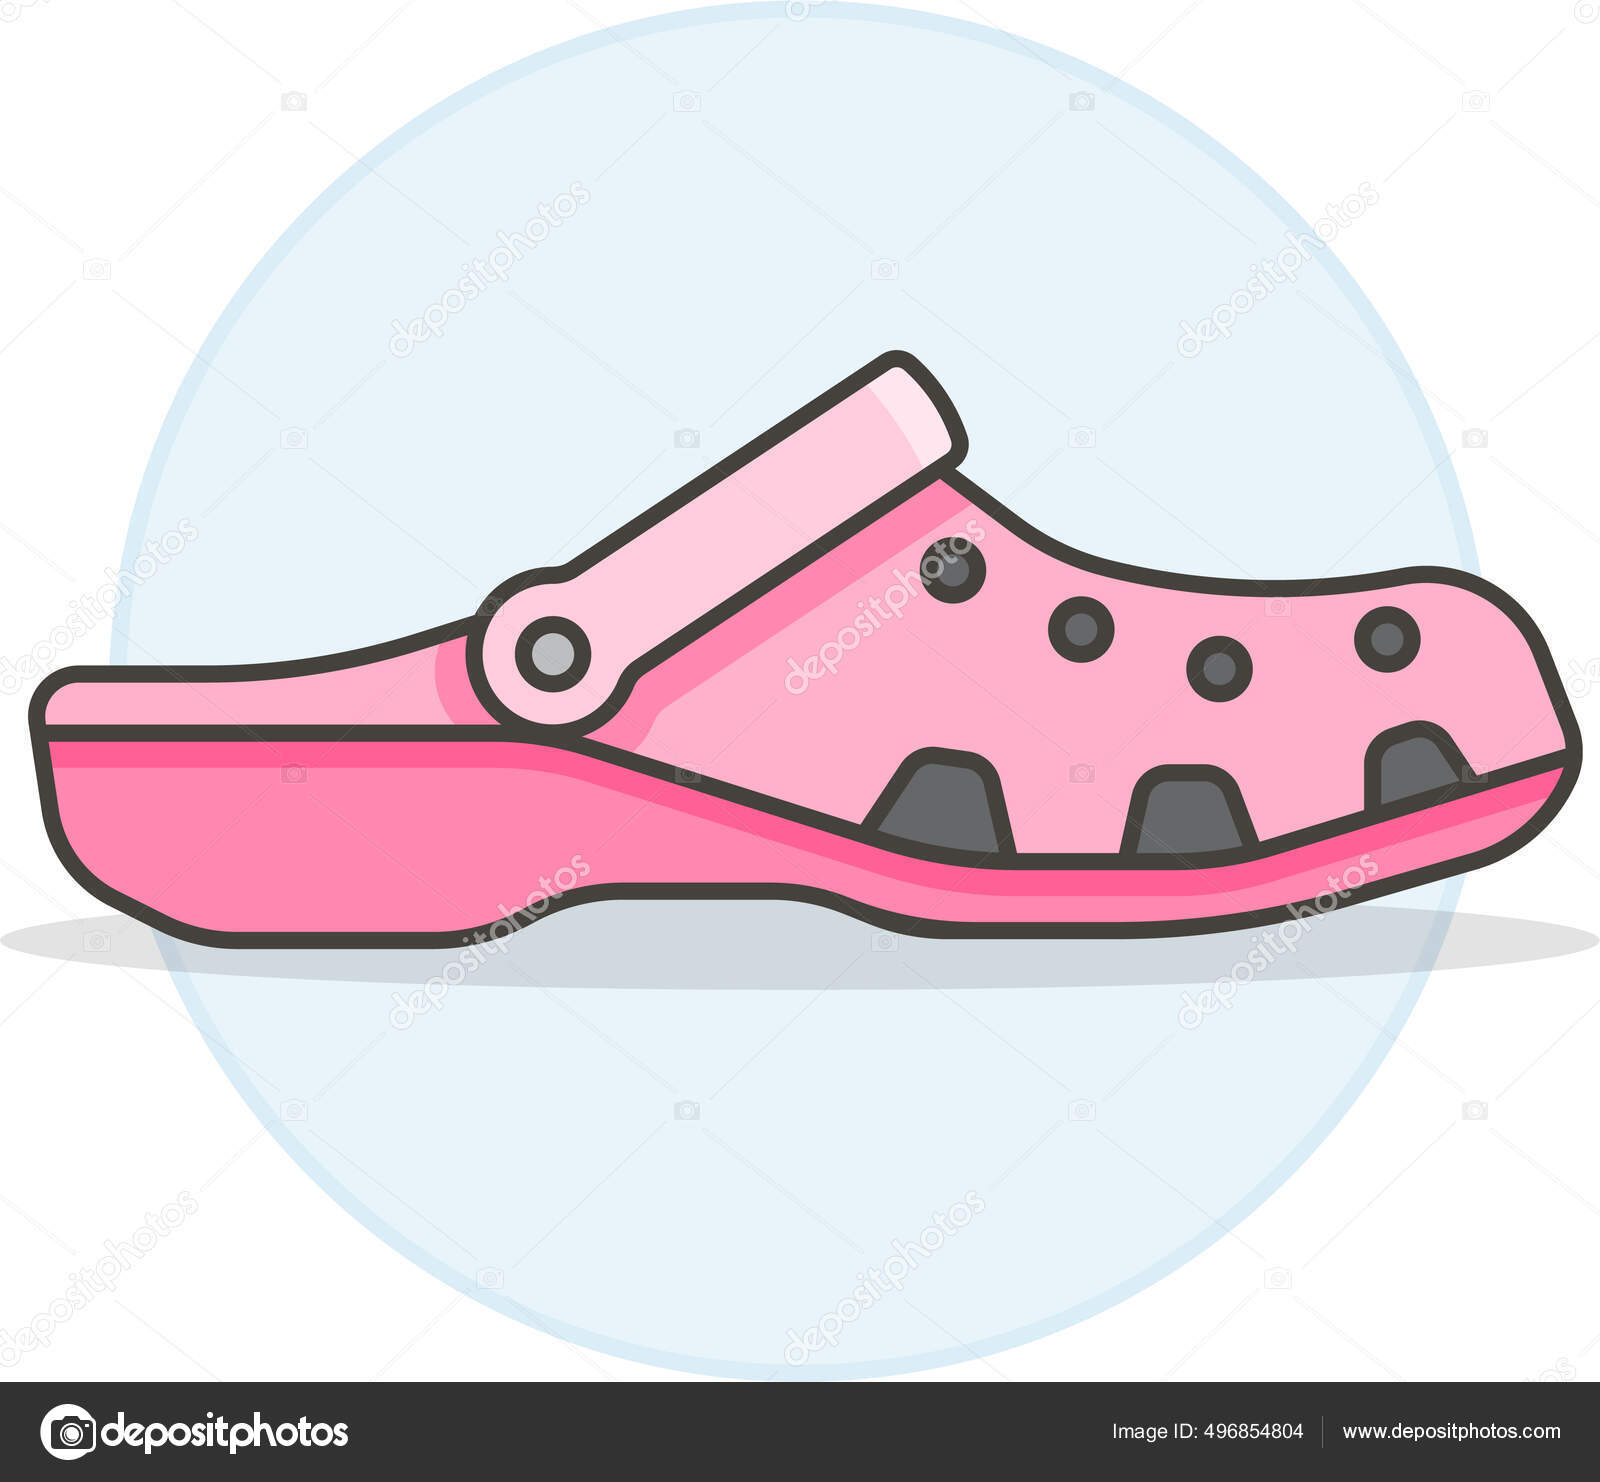 Crocs shoes Vector Art Stock Images | Depositphotos